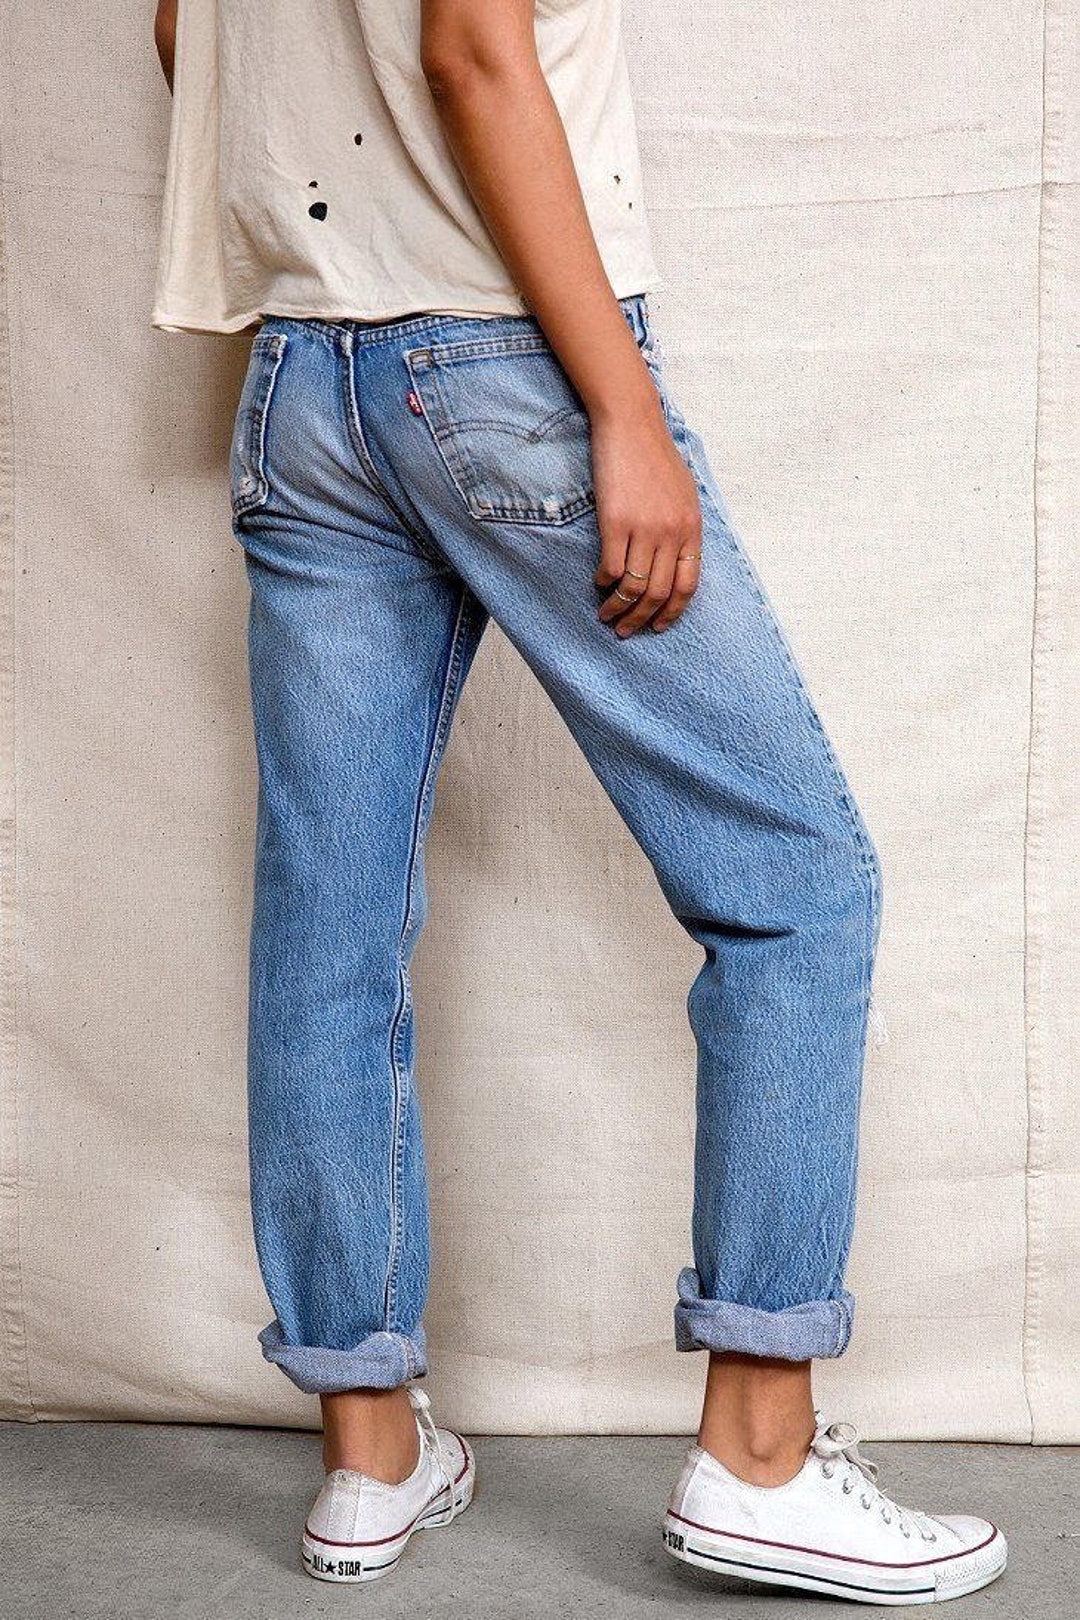 Levi Jeans Vintage Denim CUSTOM-FIT All SIZES Straight Leg 501 - Etsy